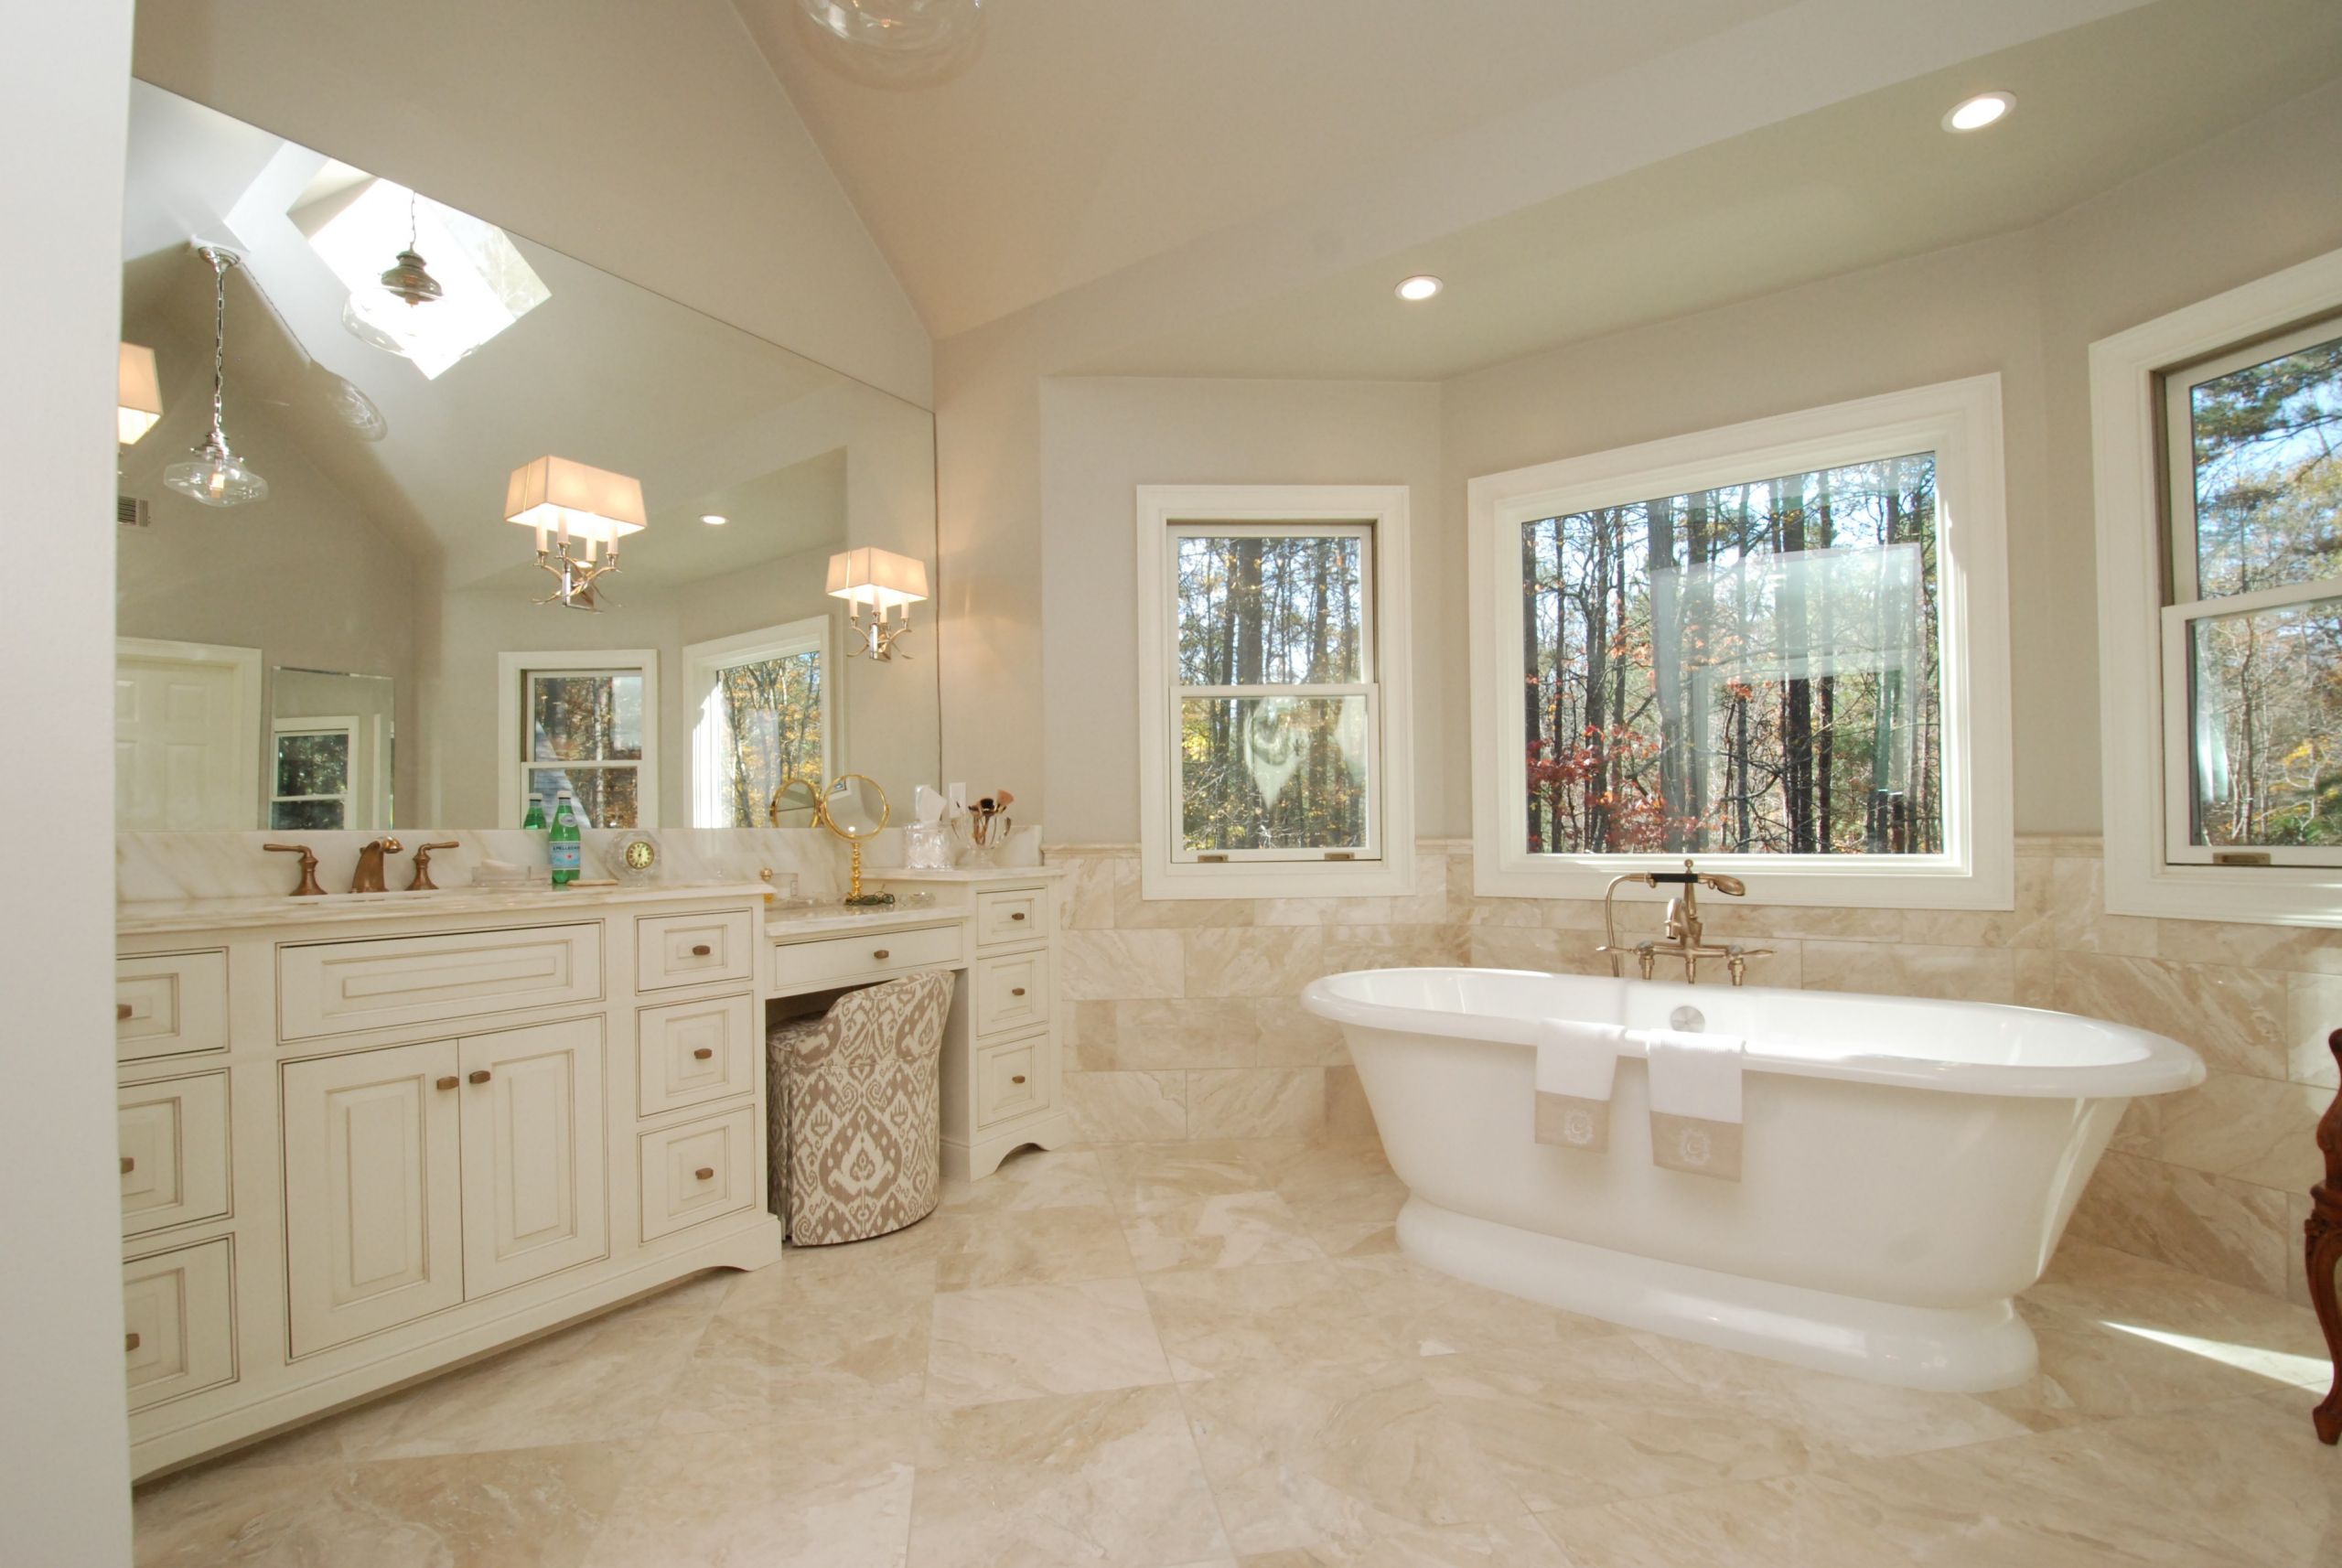 Master Bathroom Ideas Photo Gallery
 Luxury Elegant Master Bathrooms Portrait Home Sweet Home